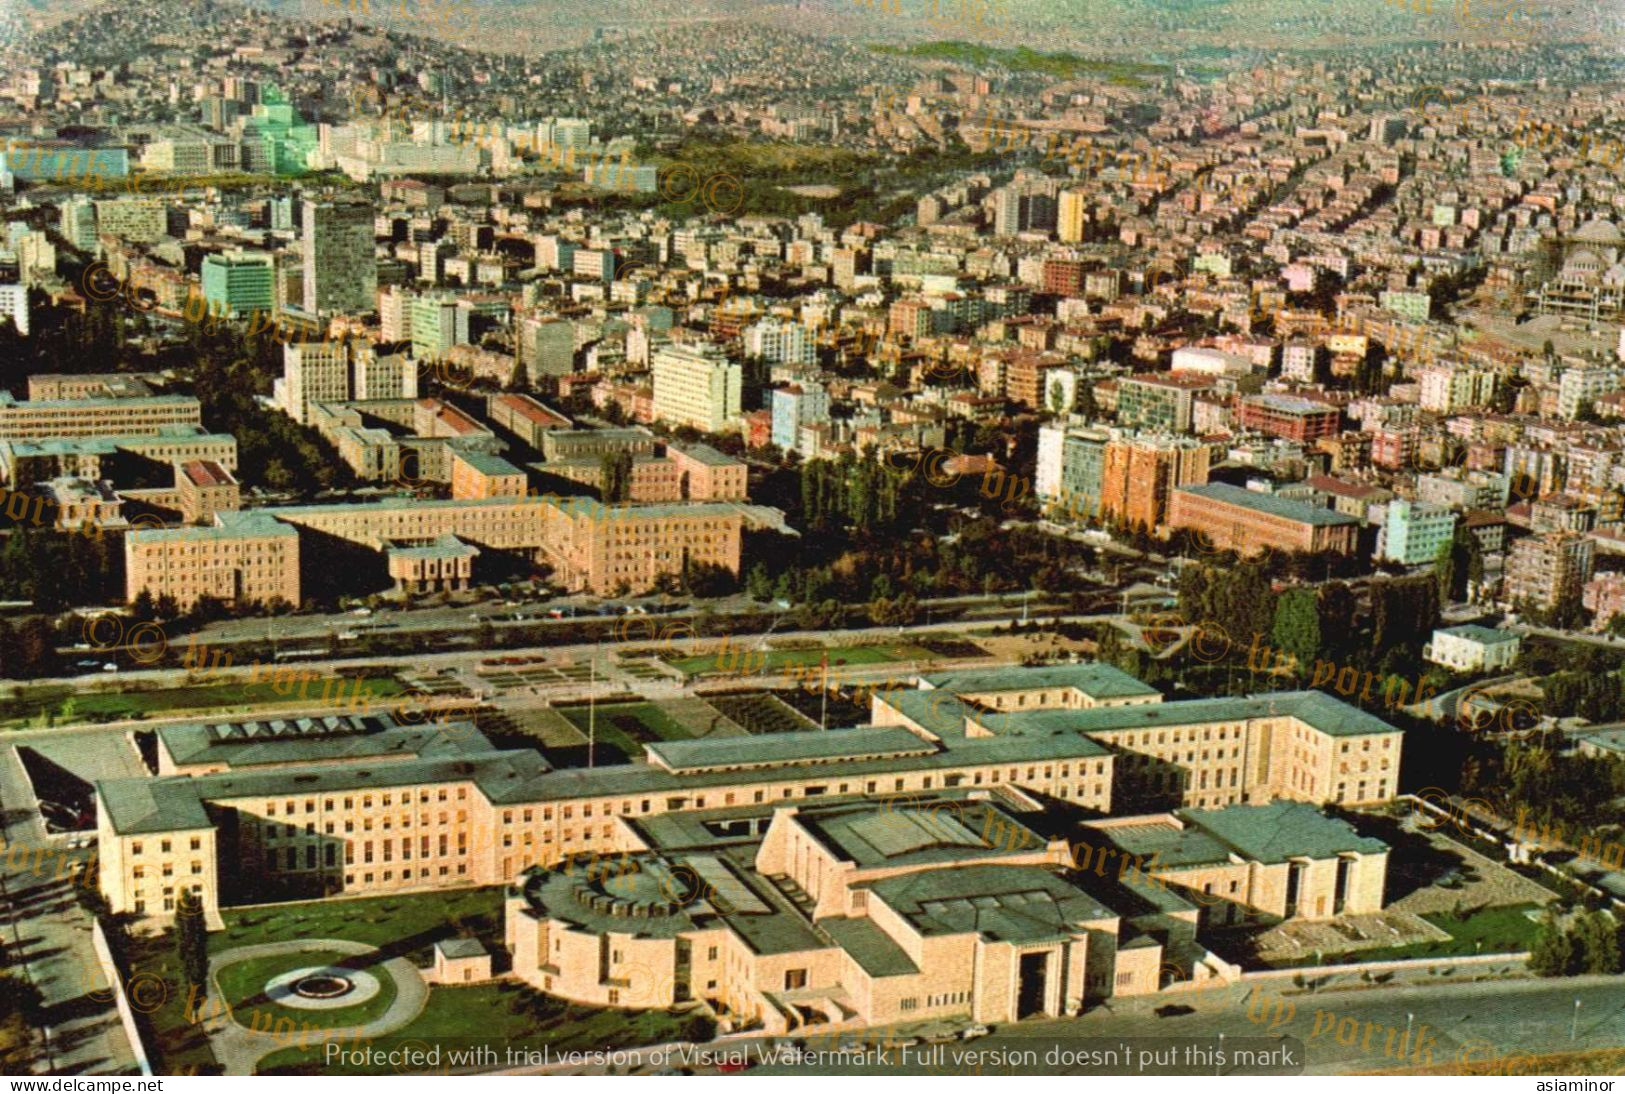 Postcard - 1970/80 - 10x15 Cm. | Turkey, Ankara - Grand National Assembly And Ministries. * - Turquia